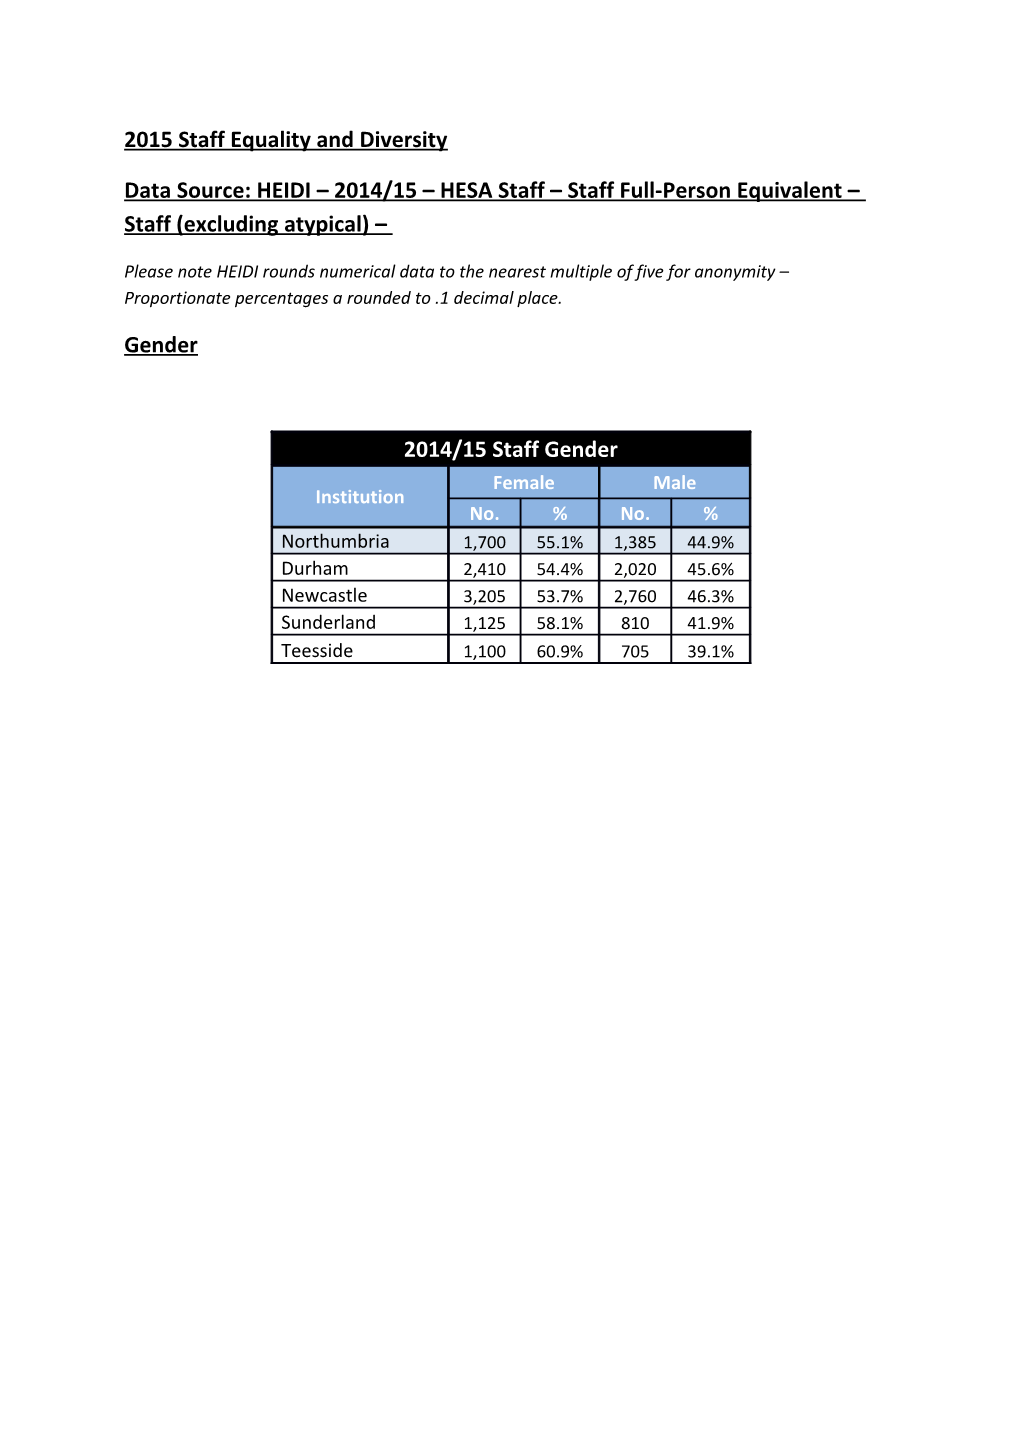 Data Source: HEIDI 2014/15 HESA Staff Staff Full-Person Equivalent Staff (Excludingatypical)